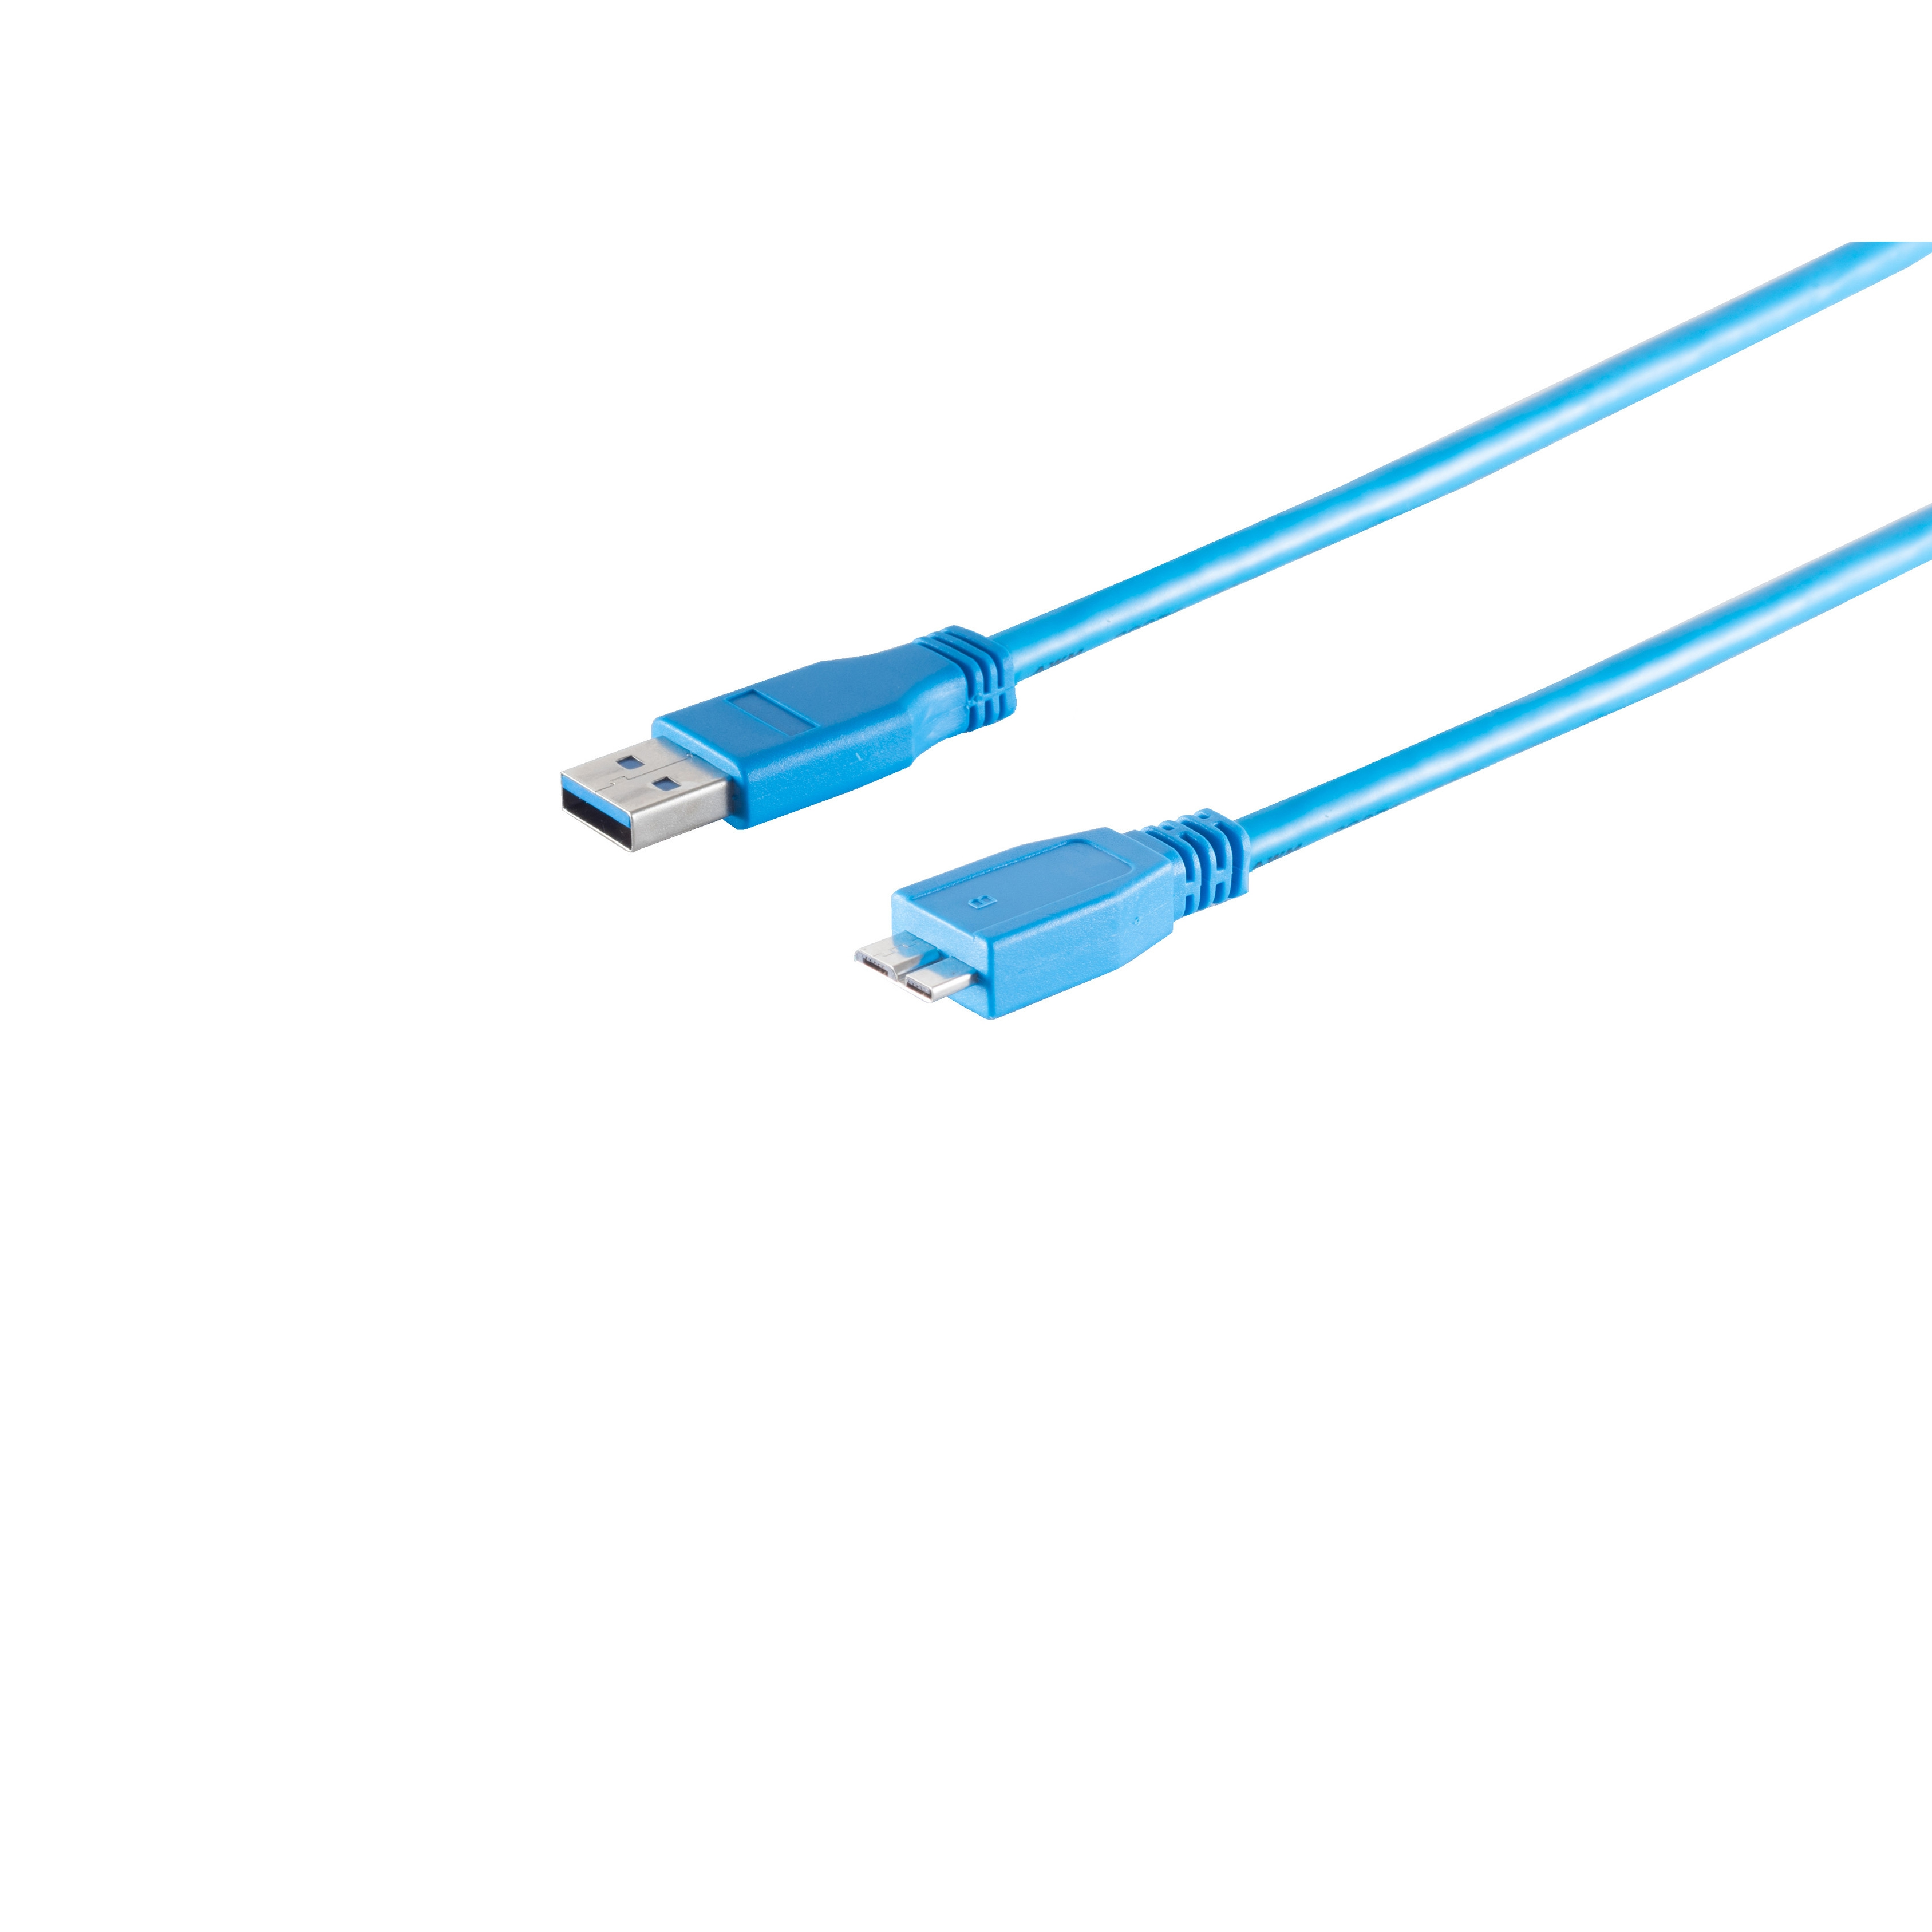 Kabel 1,8m S/CONN blau Micro-USB MAXIMUM 3.0 USB-A-St./USB-B-St. CONNECTIVITY Kabel USB